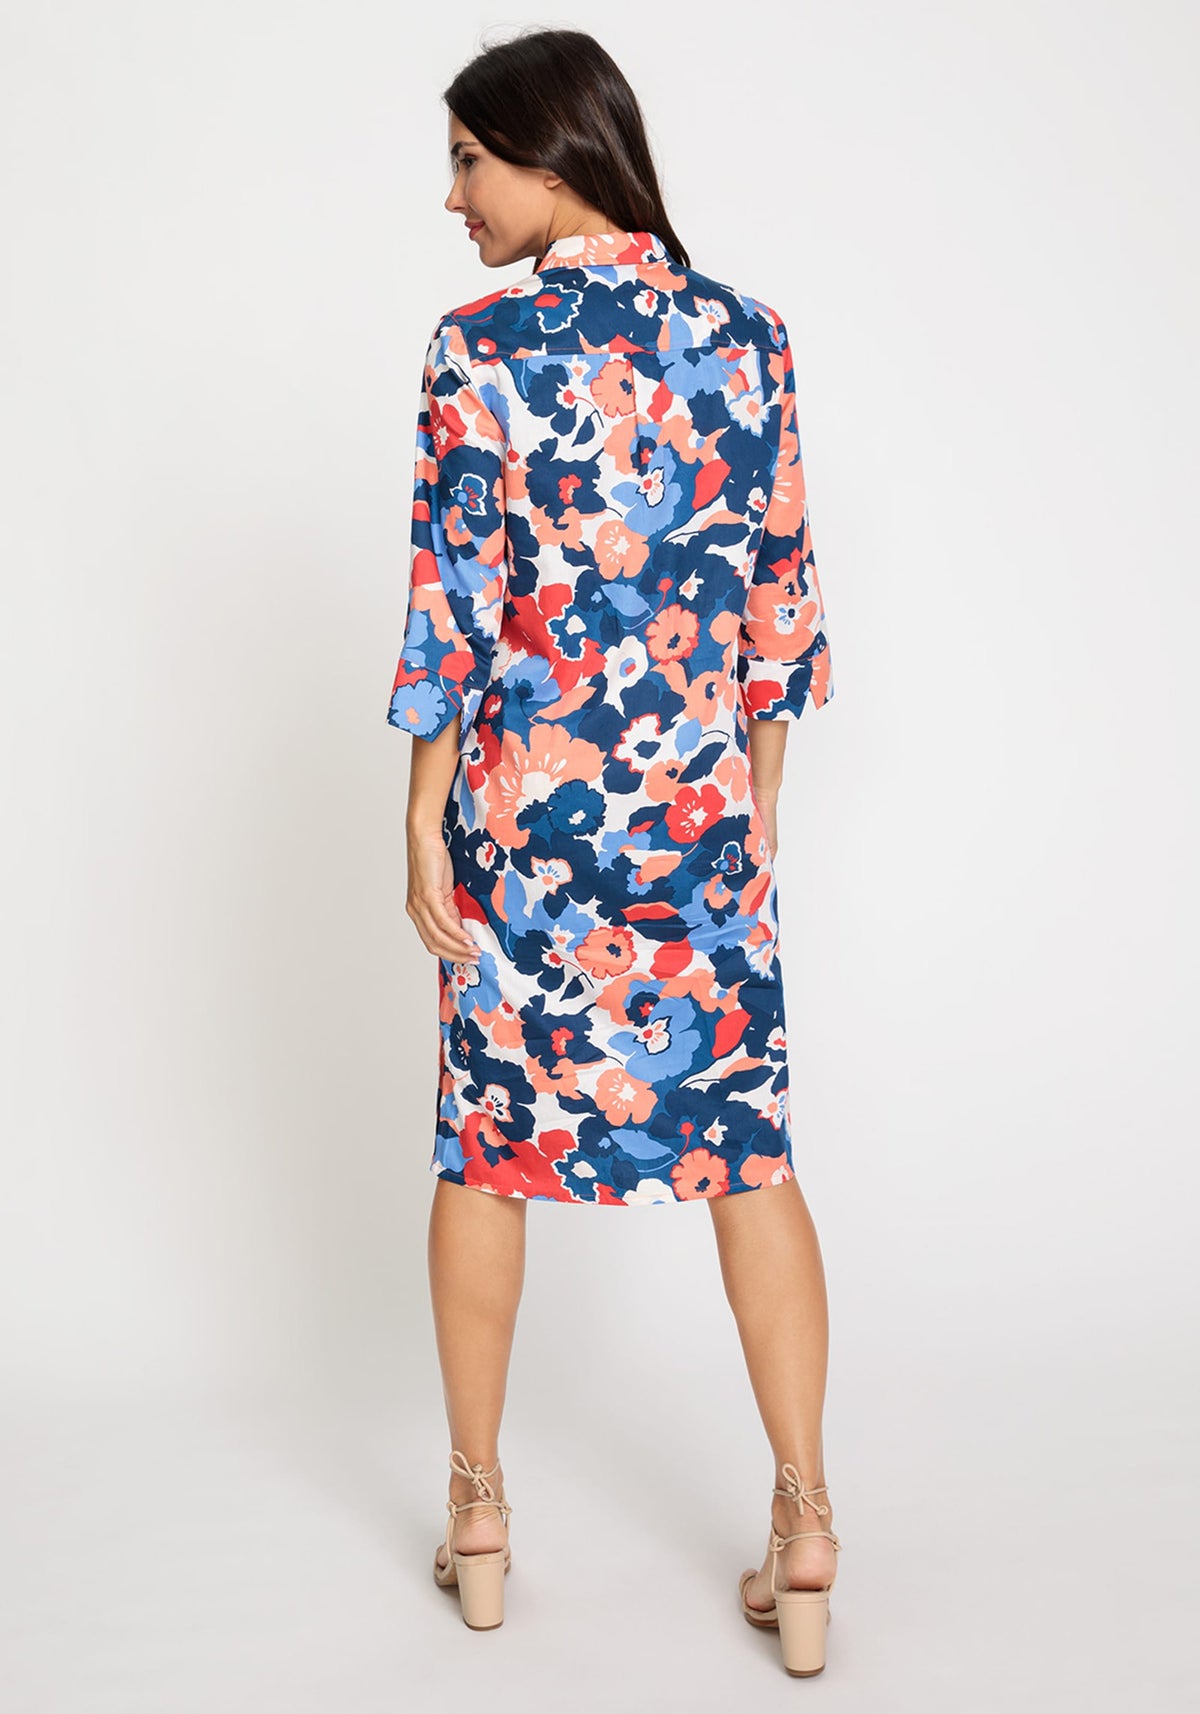 100% Cotton 3/4 Sleeve Floral Print Shirt Dress